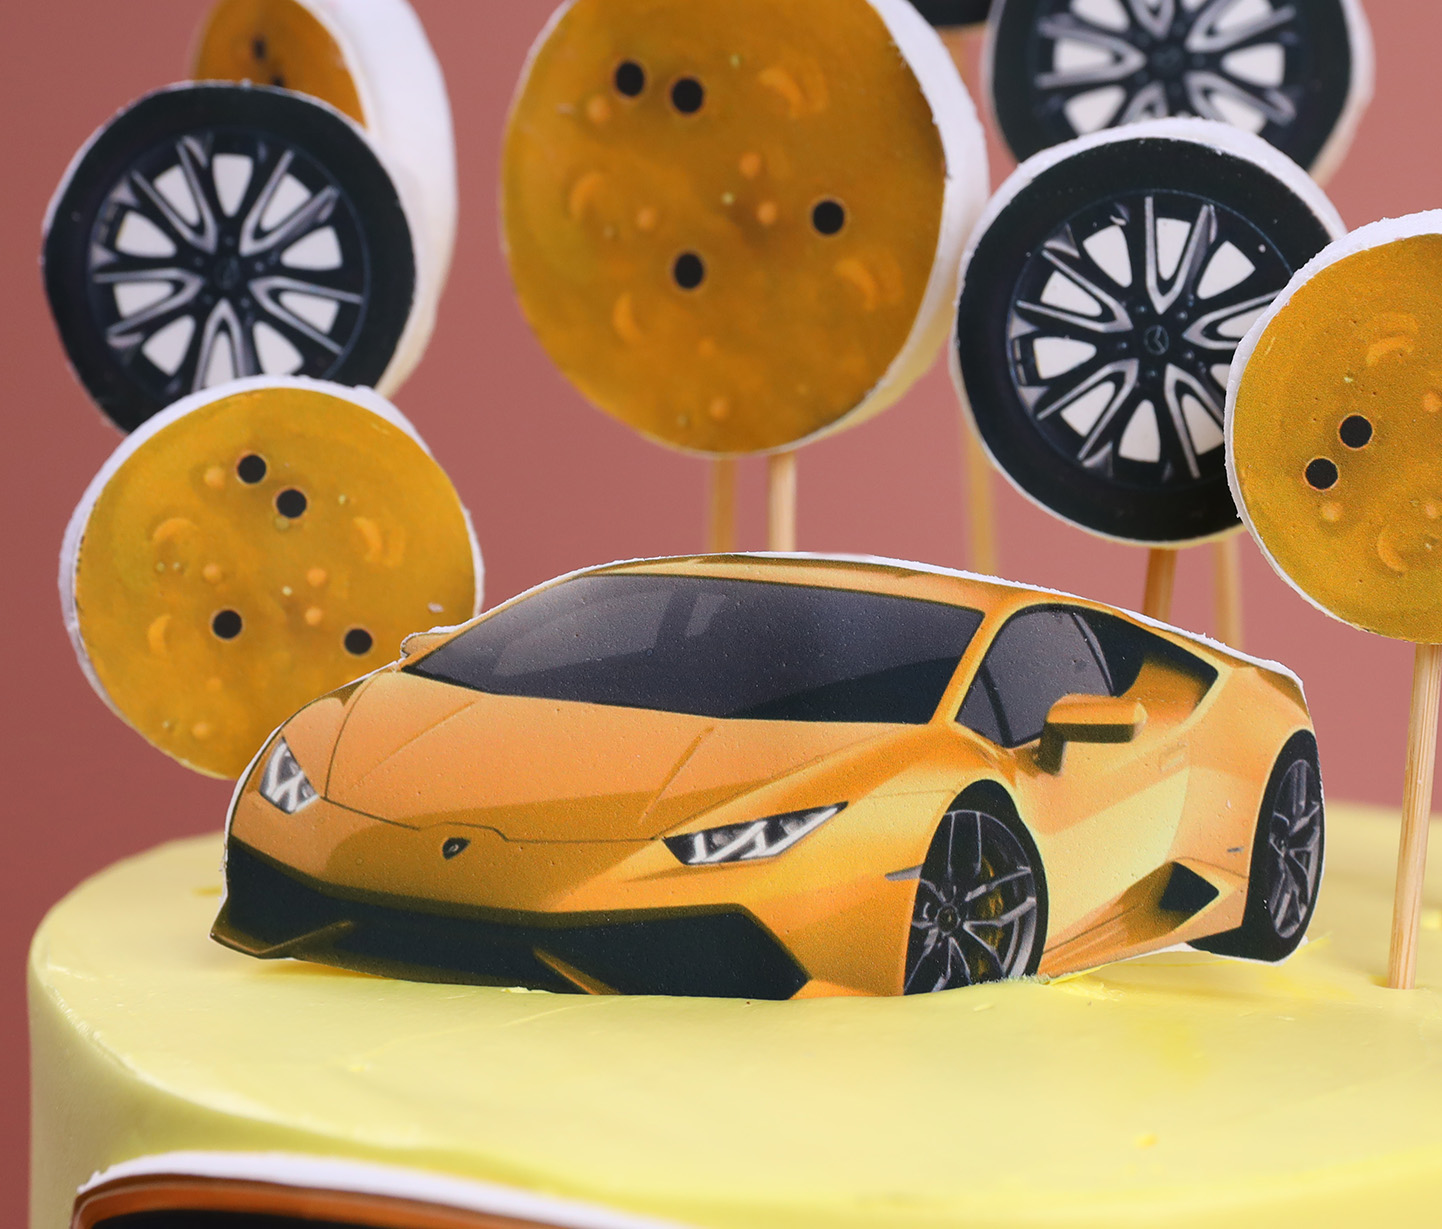 Cars Cake Smooth Cream Yellow Piping+Lamborghini Image - Pure Gelato Sydney  - Pure Gelato Sydney | Gelato | Gelato Cakes | Gelato Fundraising